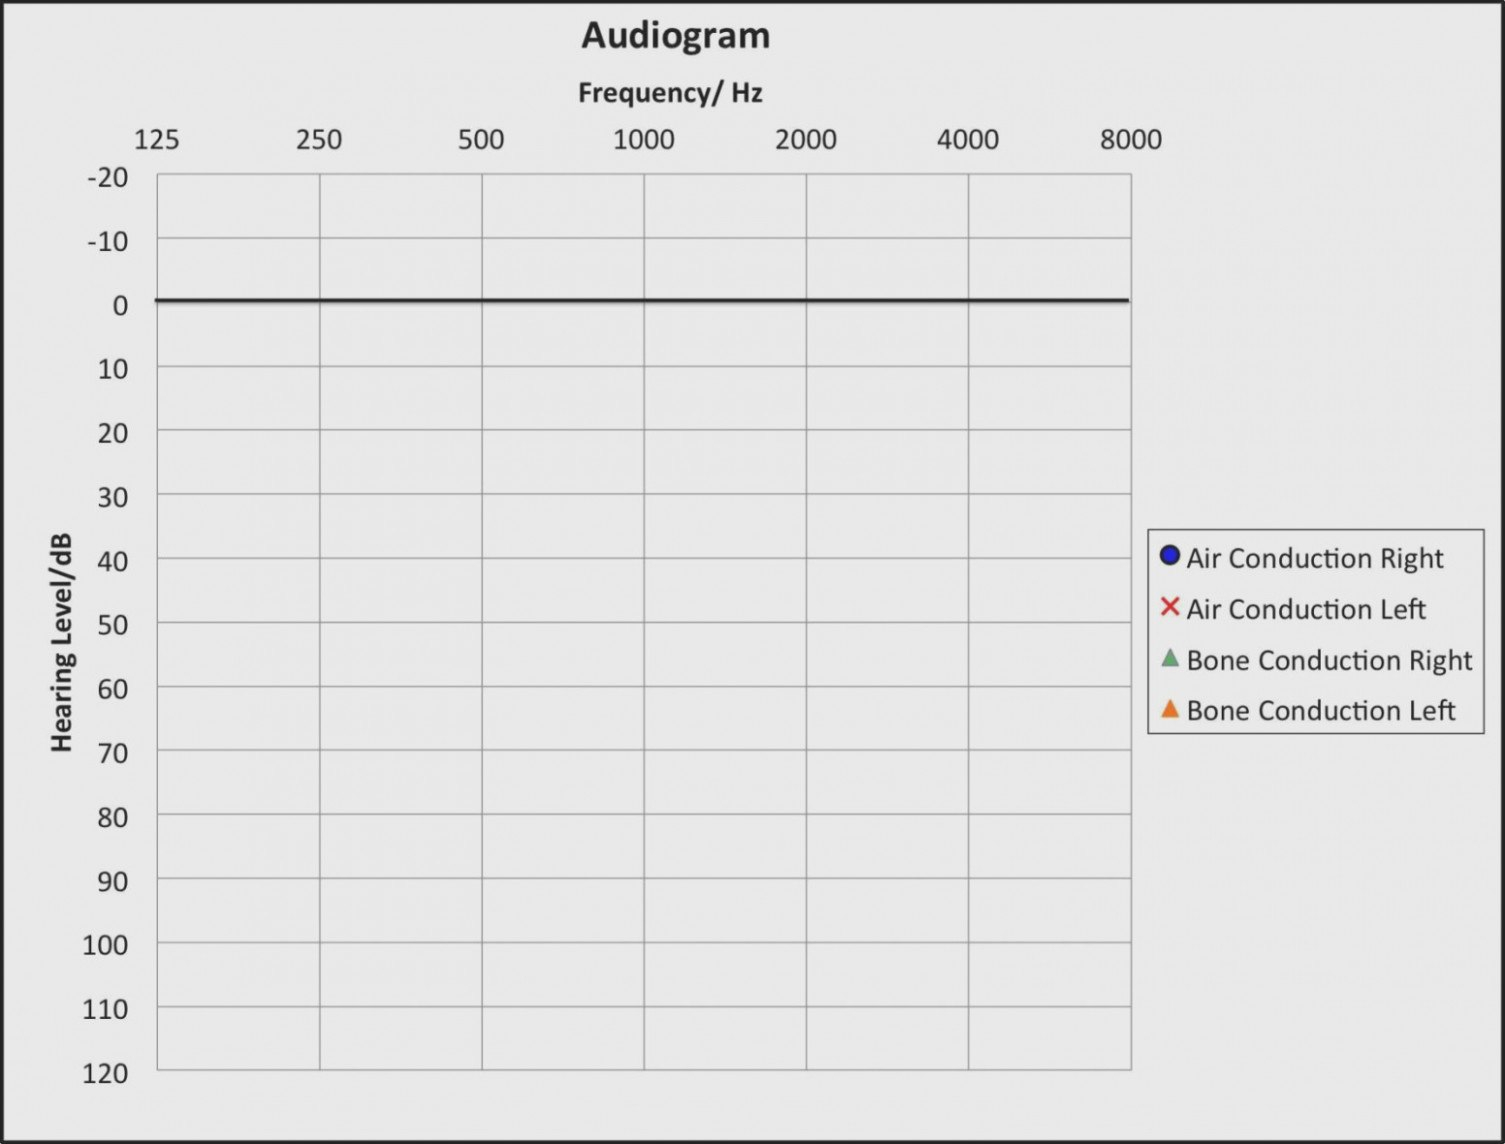 Blank Audiogram Template Download  Chart Designs Template inside Blank Audiogram Template Download